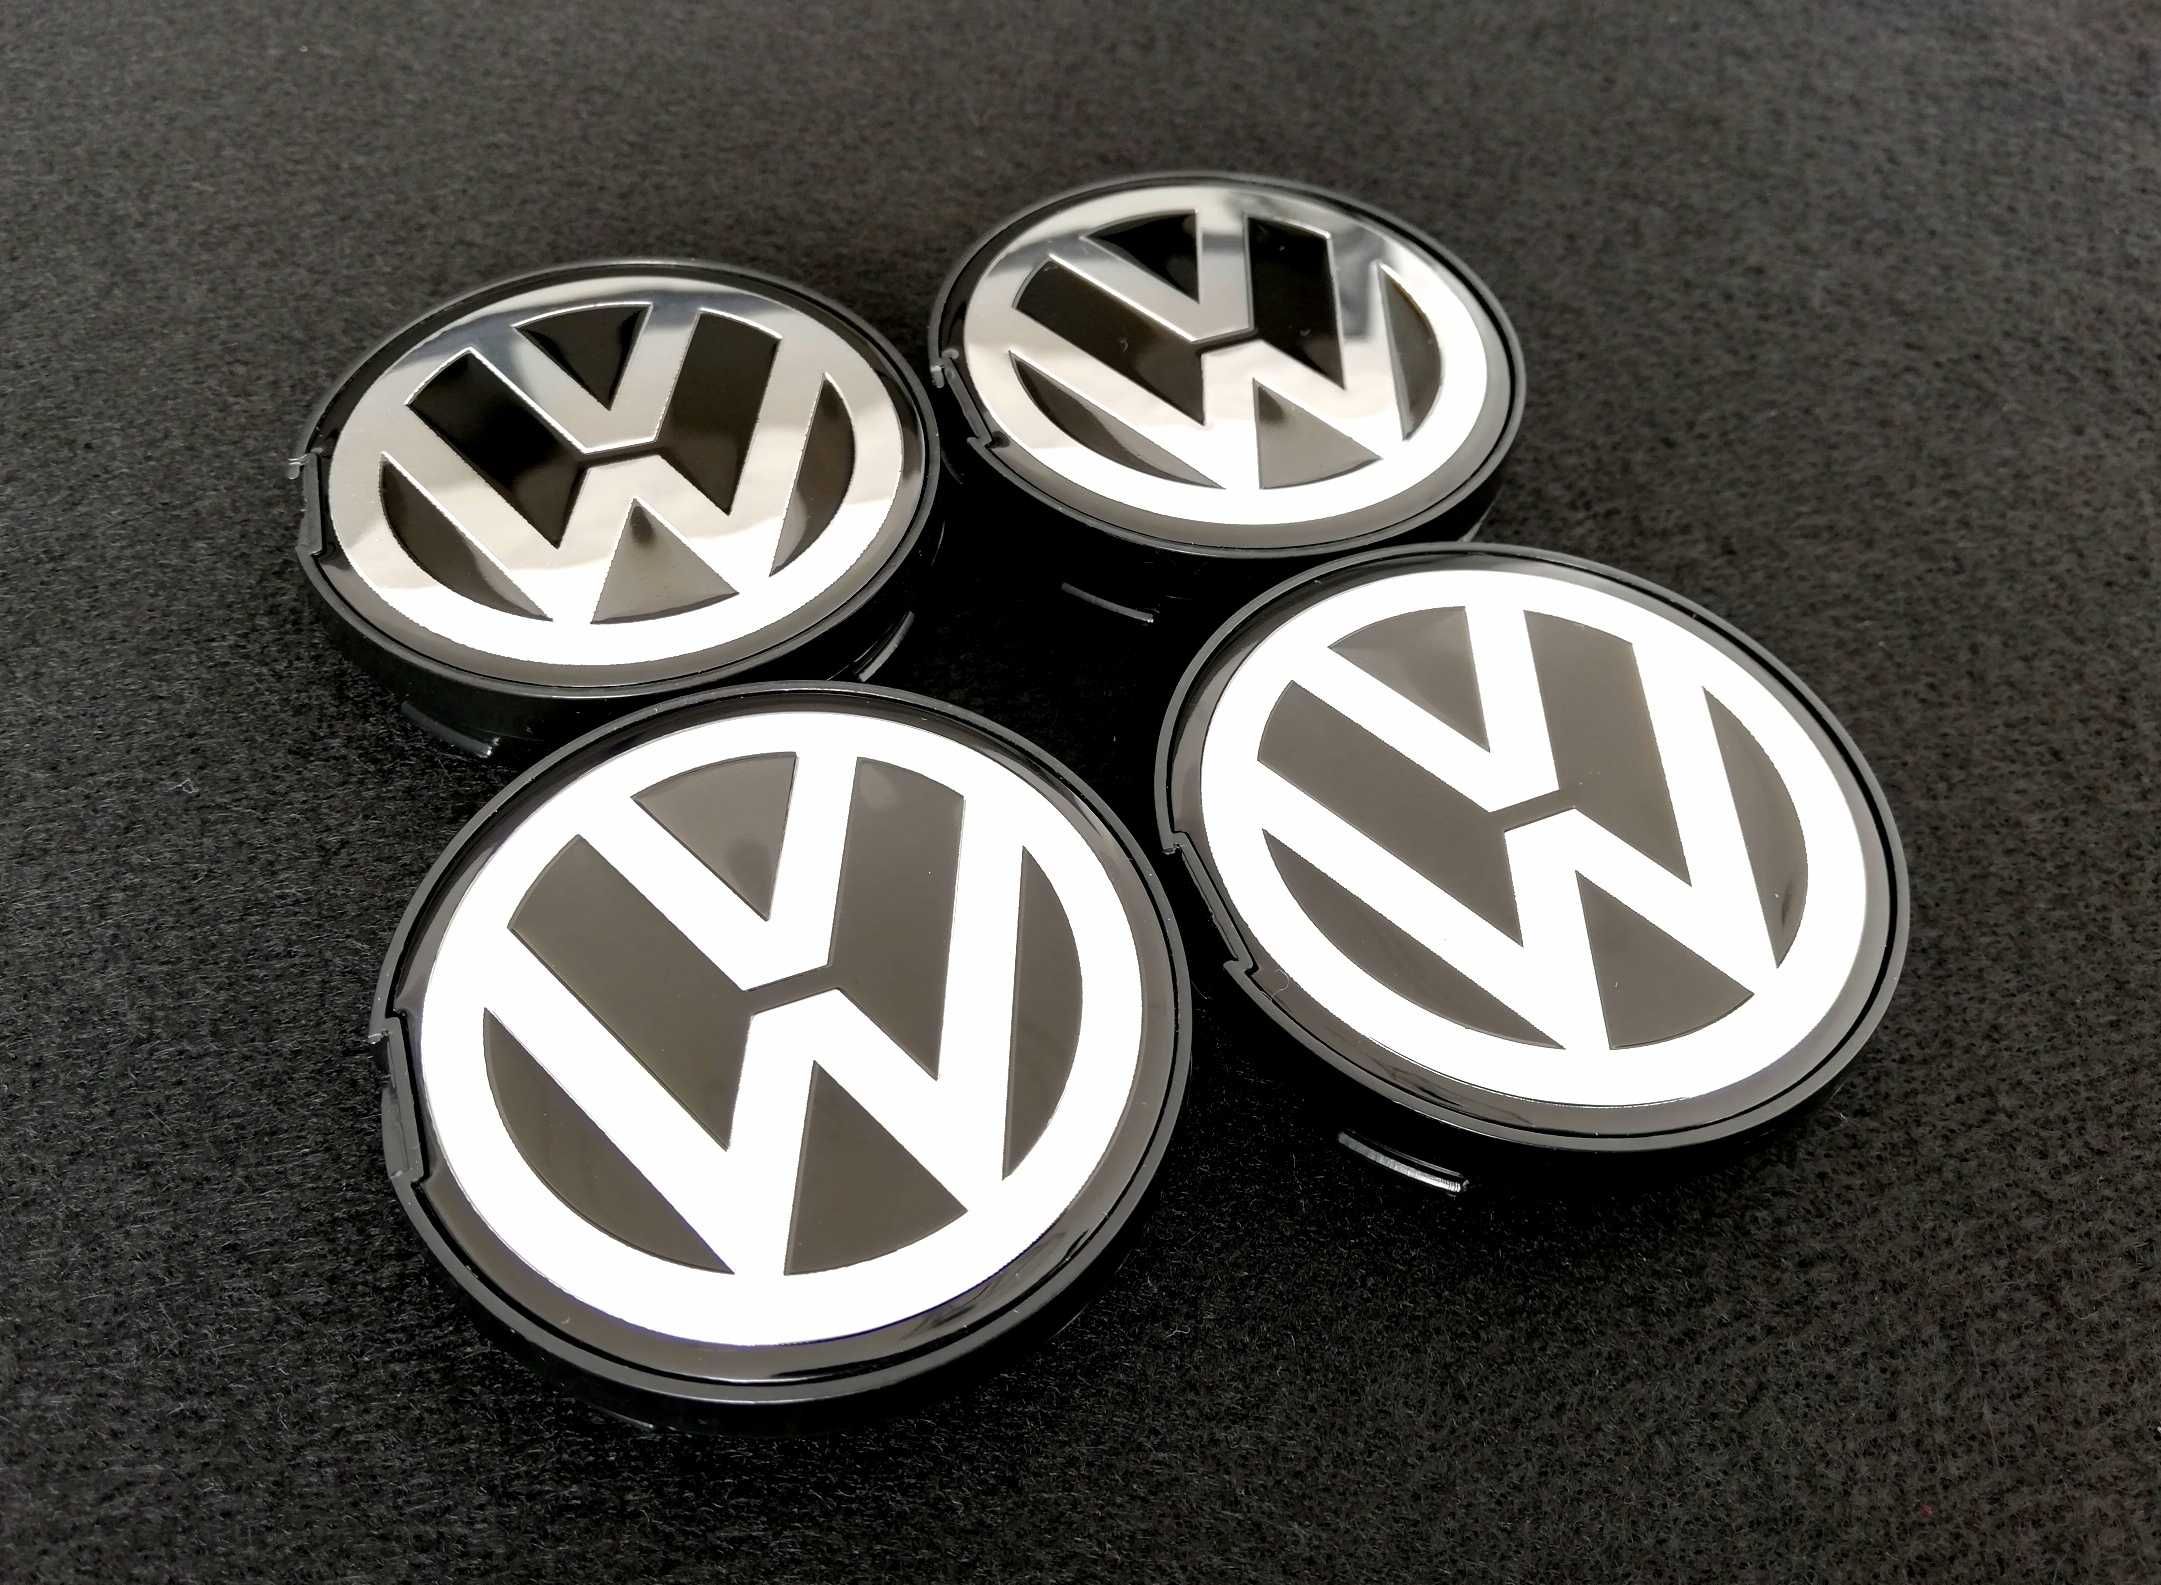 Centros de jante Volkswagen 55mm PORTES GRÁTIS